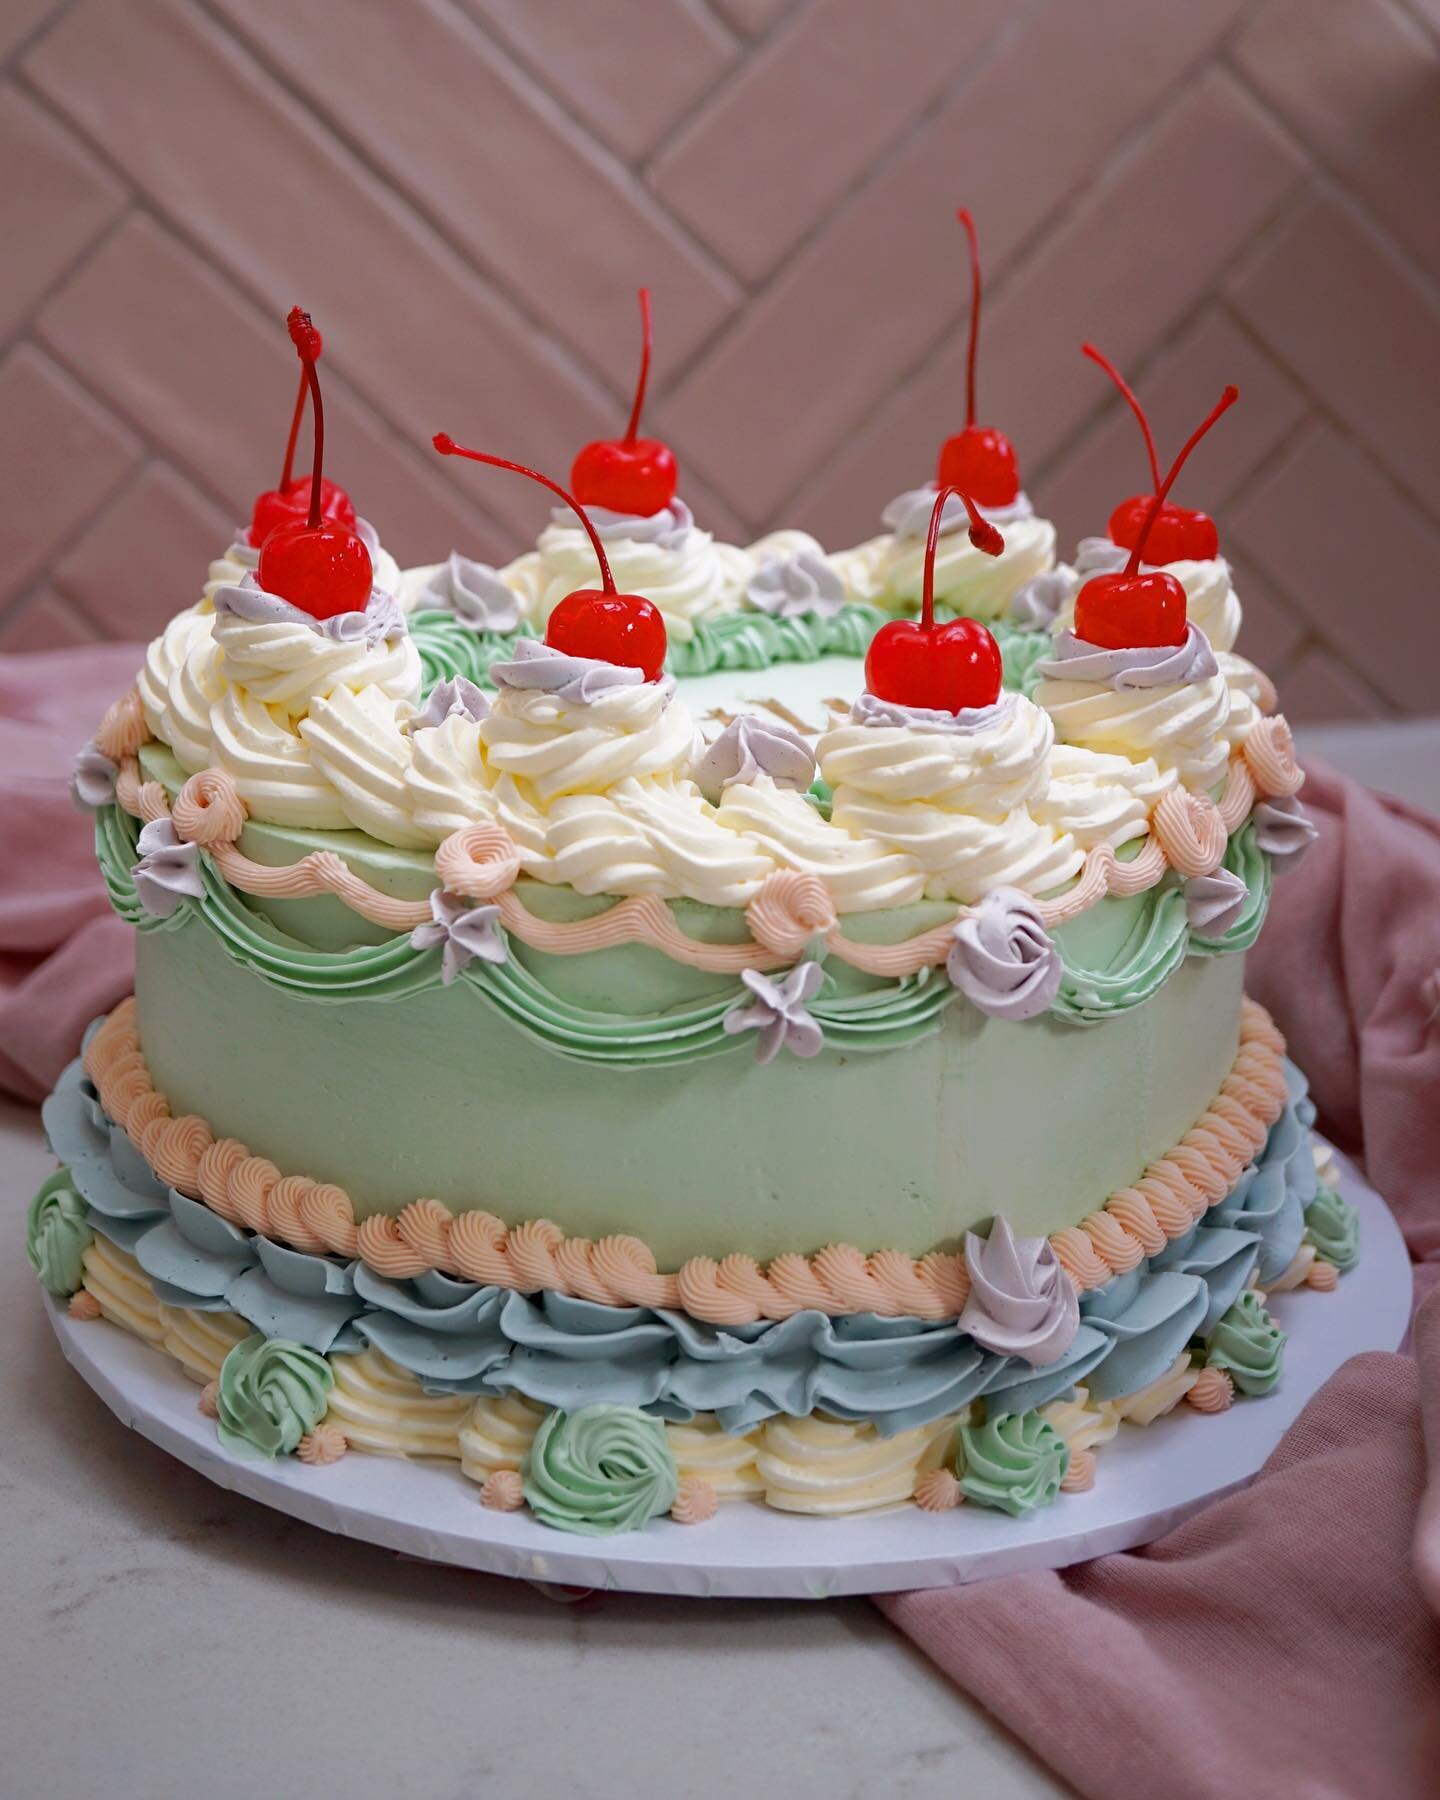 🍒🌿 CHERRY 🌿🍒
⠀⠀⠀⠀⠀⠀⠀⠀⠀
#candylandparty #birthdaycake #dripcake #pastelcake #buttercream #candylandcake #cake #cakemaker #cakedecorating #instacake #instacakes #baker #bake #lovecake #caketrends #cakeinspo #colourpop #cakephotography #tallcake #ca